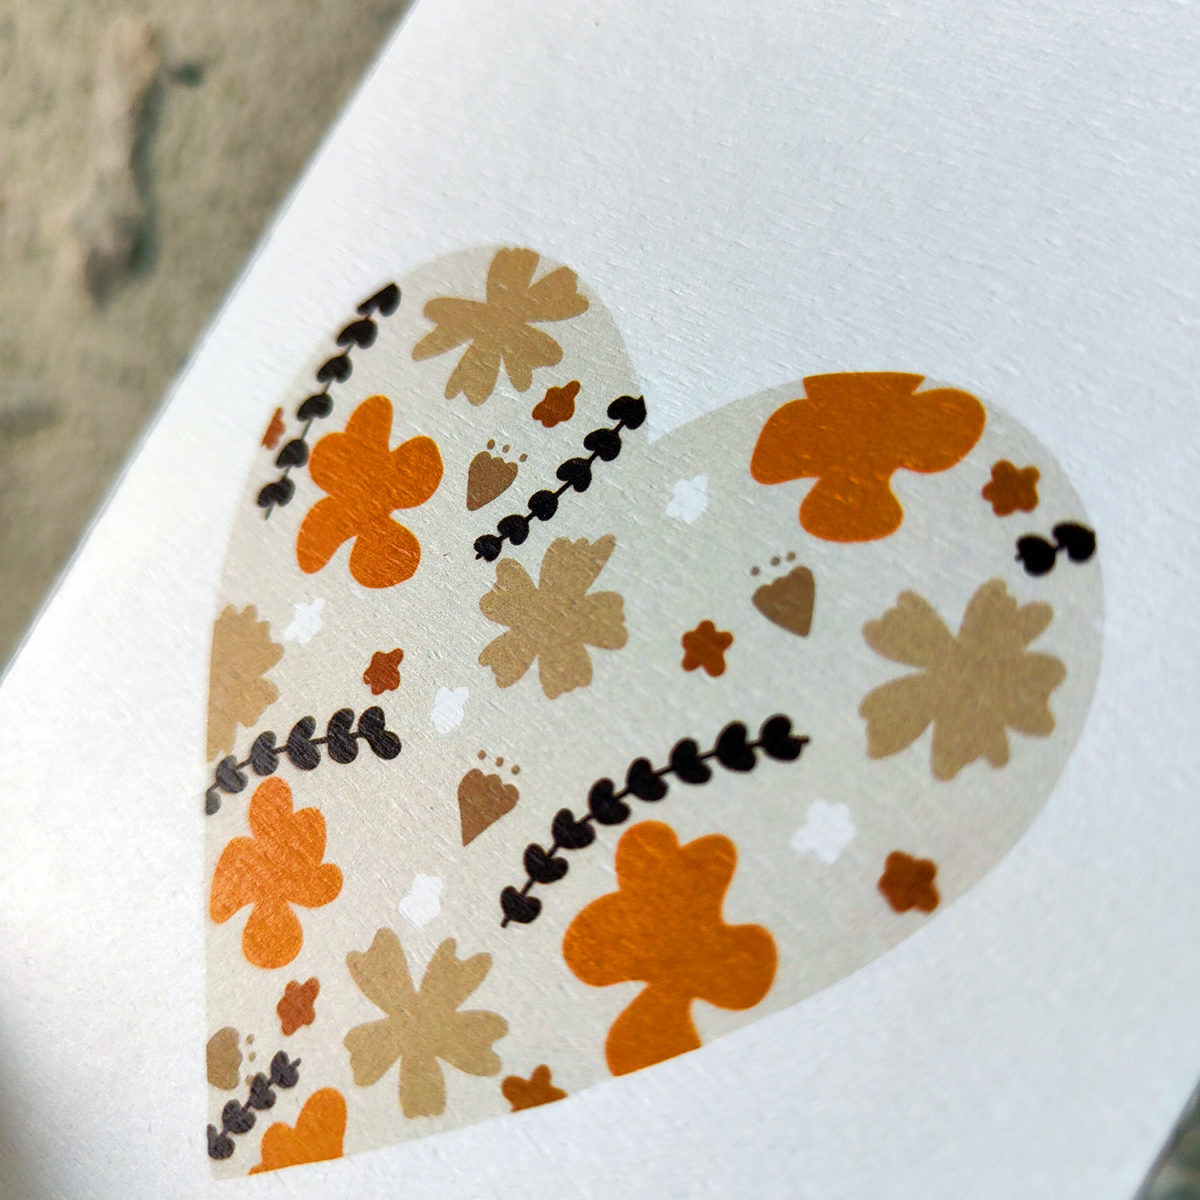 Carte postale “Coeur Fleuri”